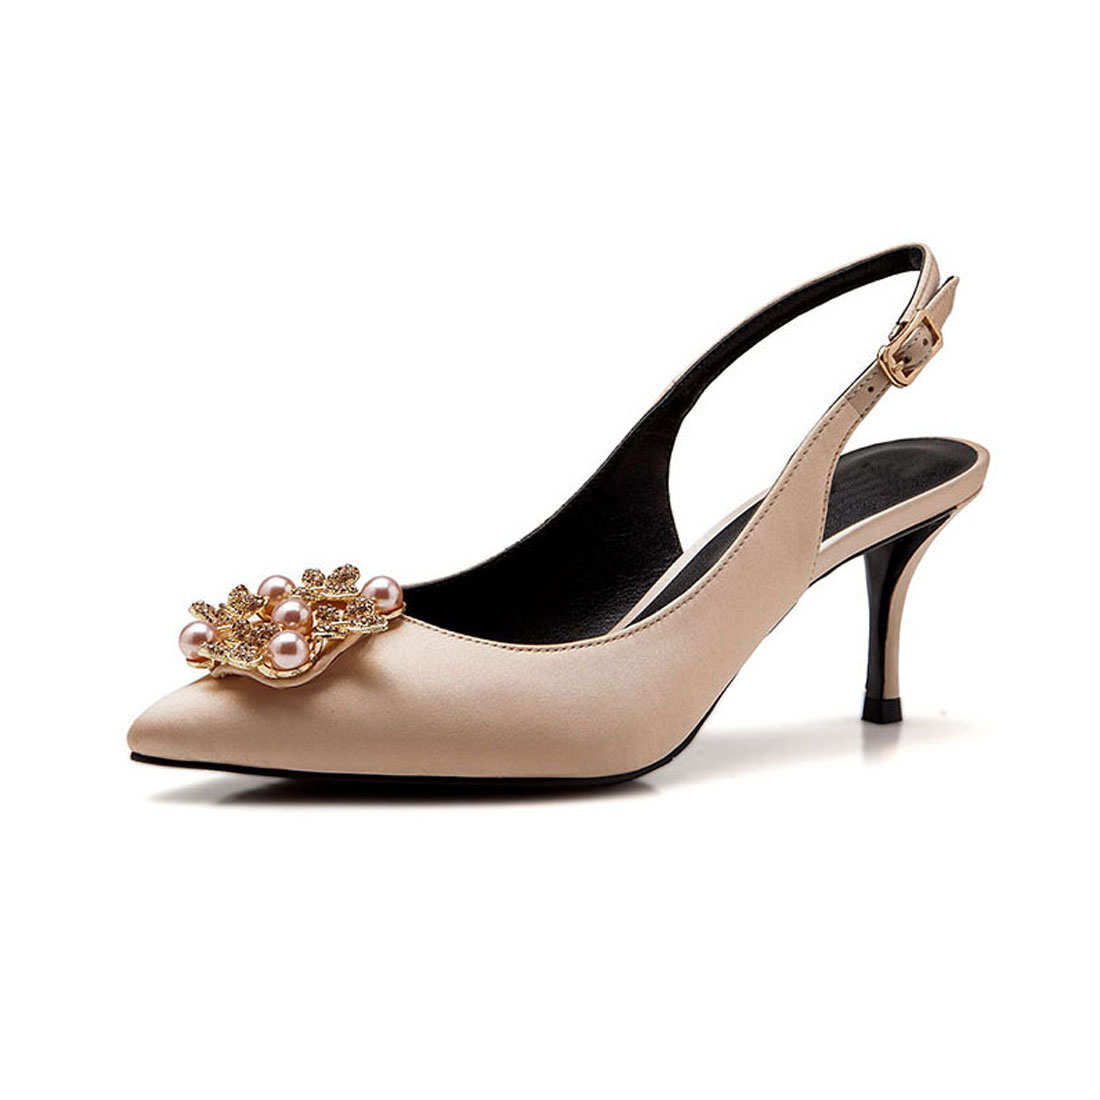 Elegance style with diamante open back women heel sandal dress shoes YH1154